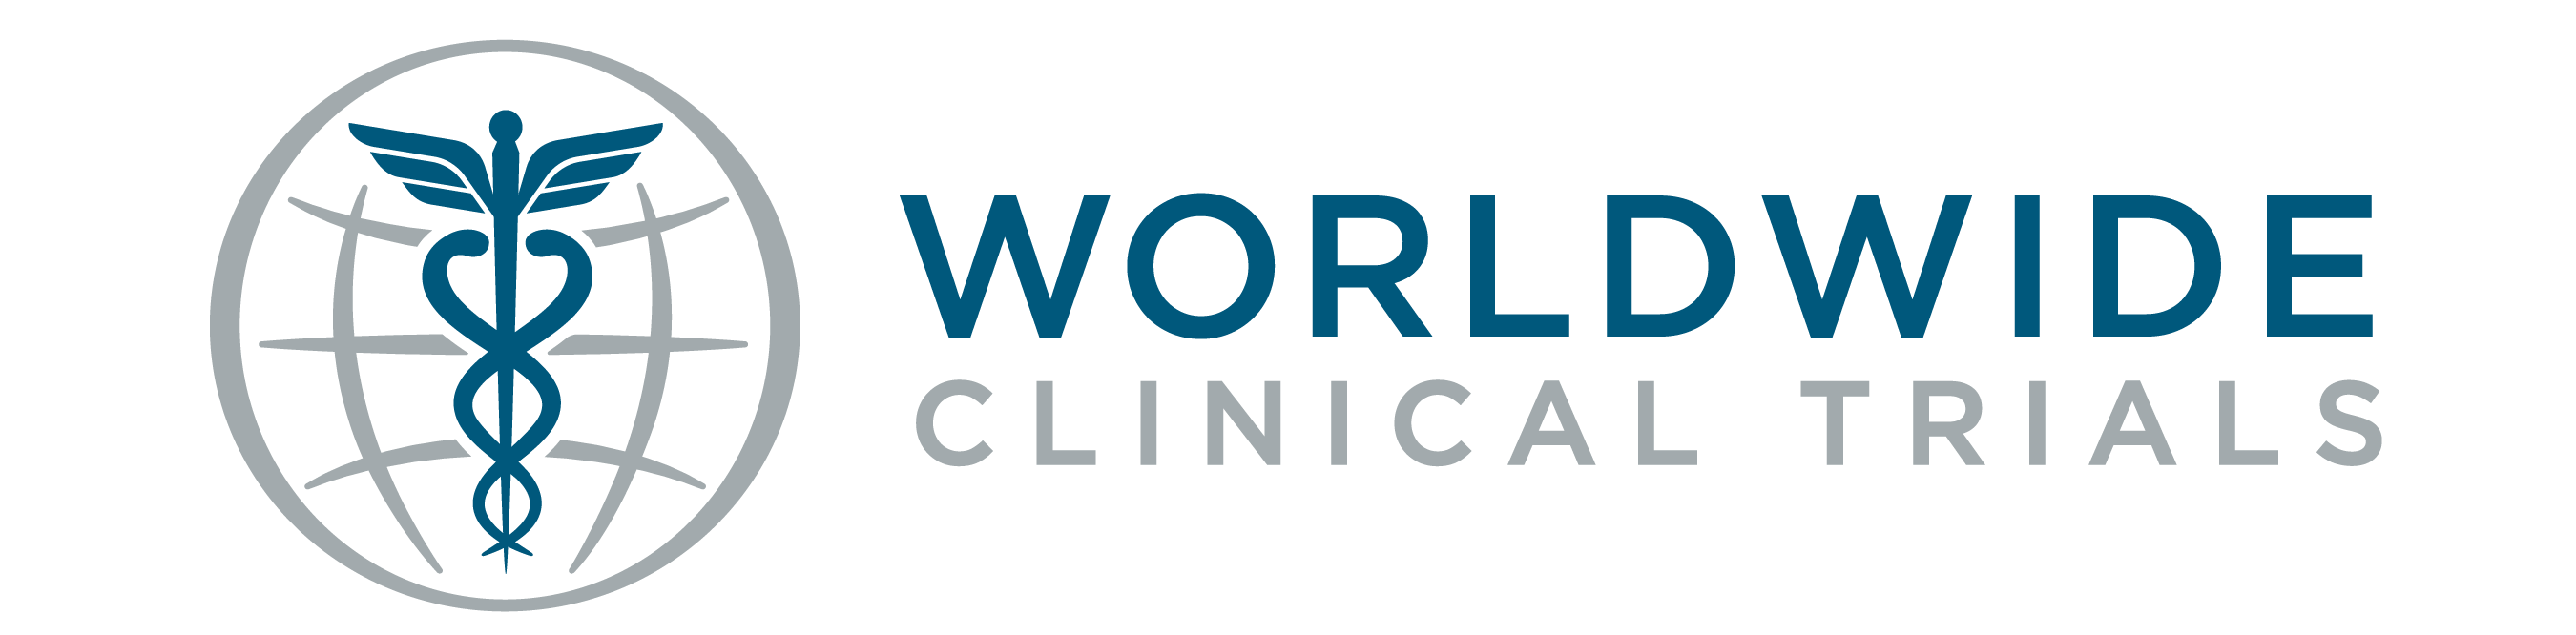 Worldwide Clinical Trials